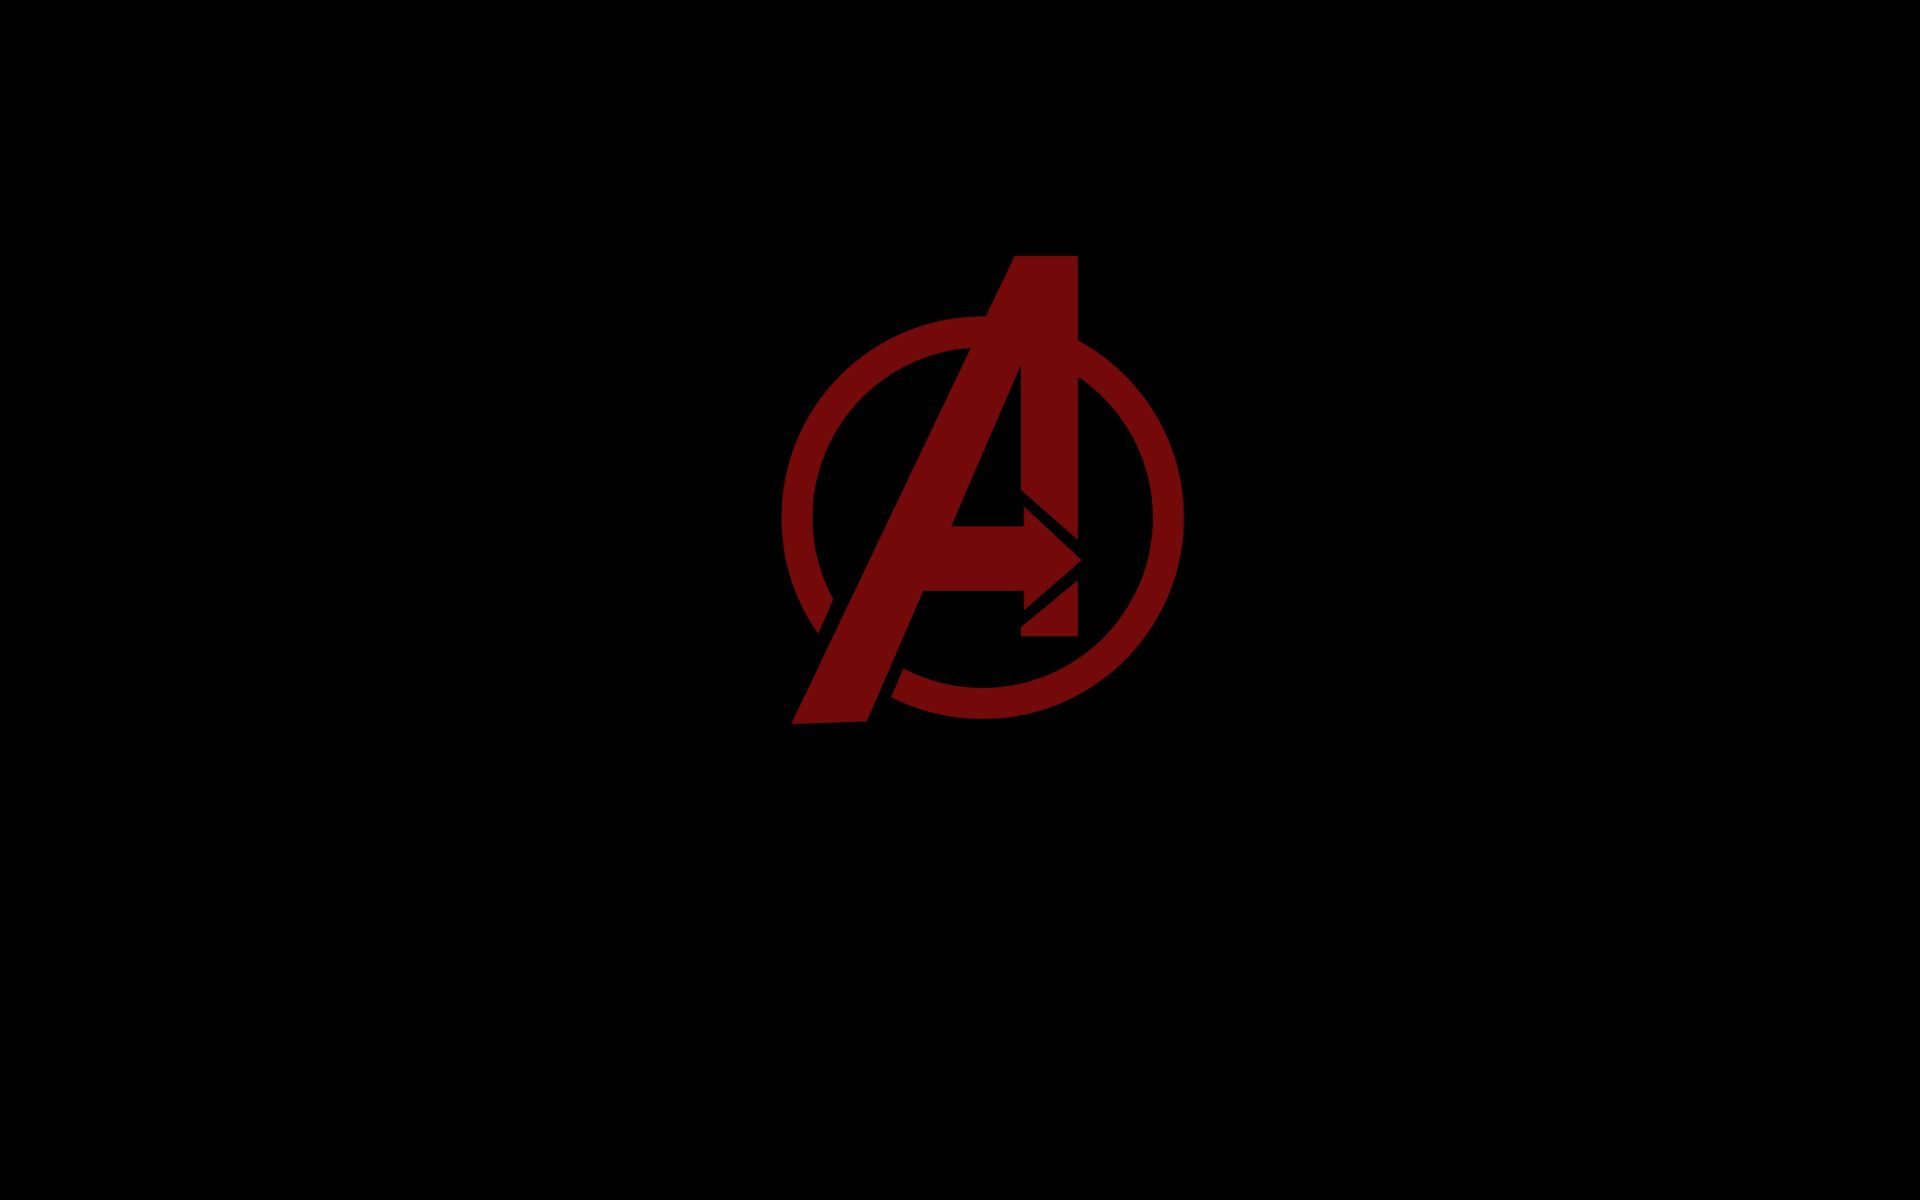  Avengers Symbol Wallpapers Download at WallpaperBro